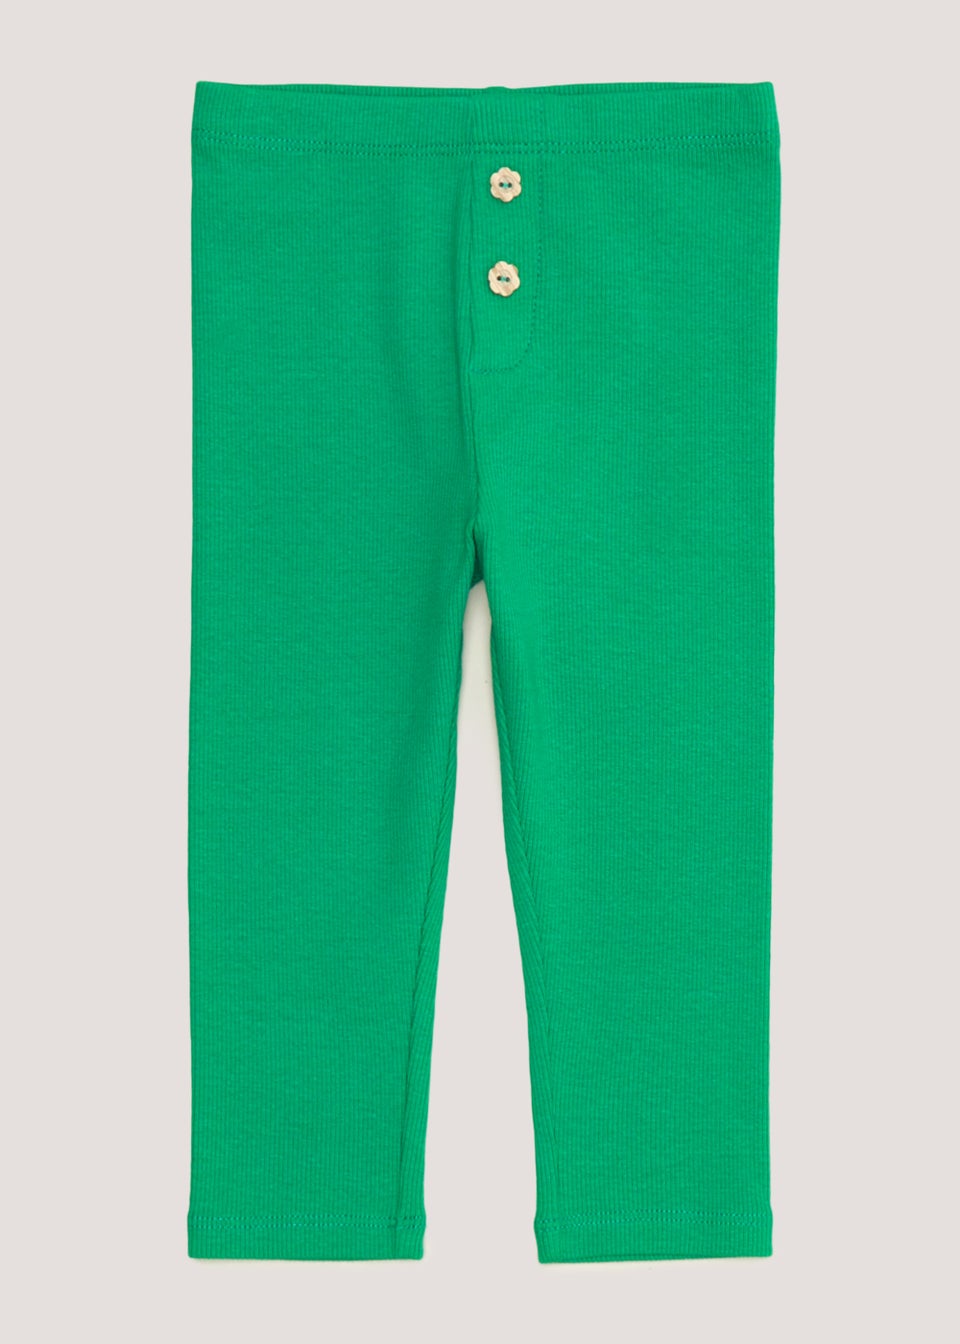 Matalan 9-12 Months Green leggings